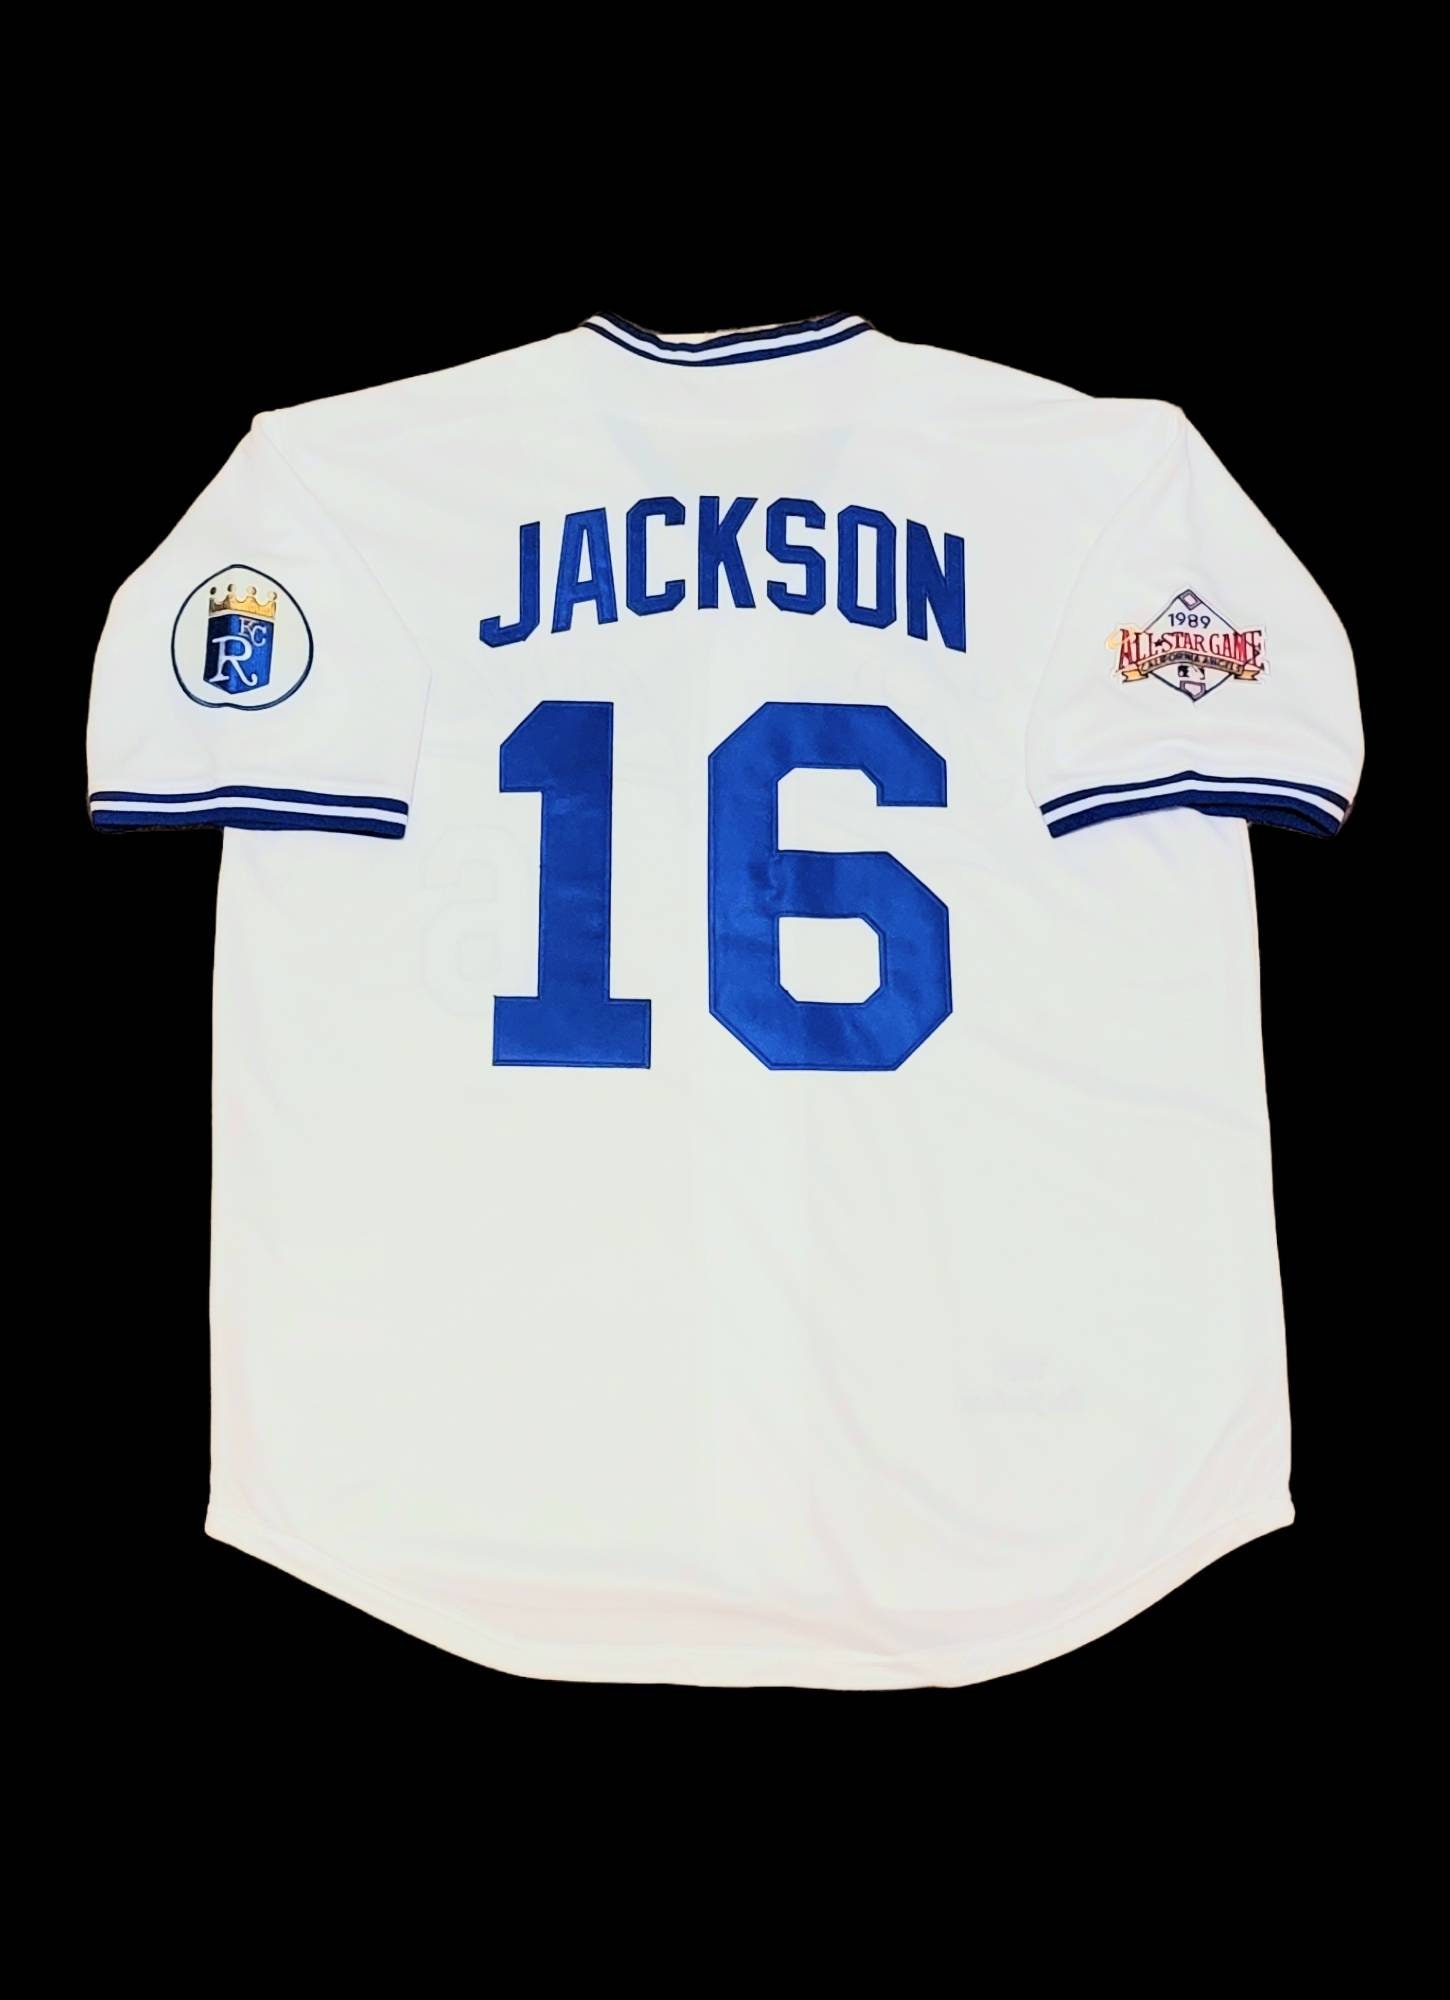 XclusiveTreasures Bo Jackson Jersey Kansas City Royals 1989 All-Star Retro Throwback White Birthday Present Gift Idea! Good for Autographs! Vintage Sale!